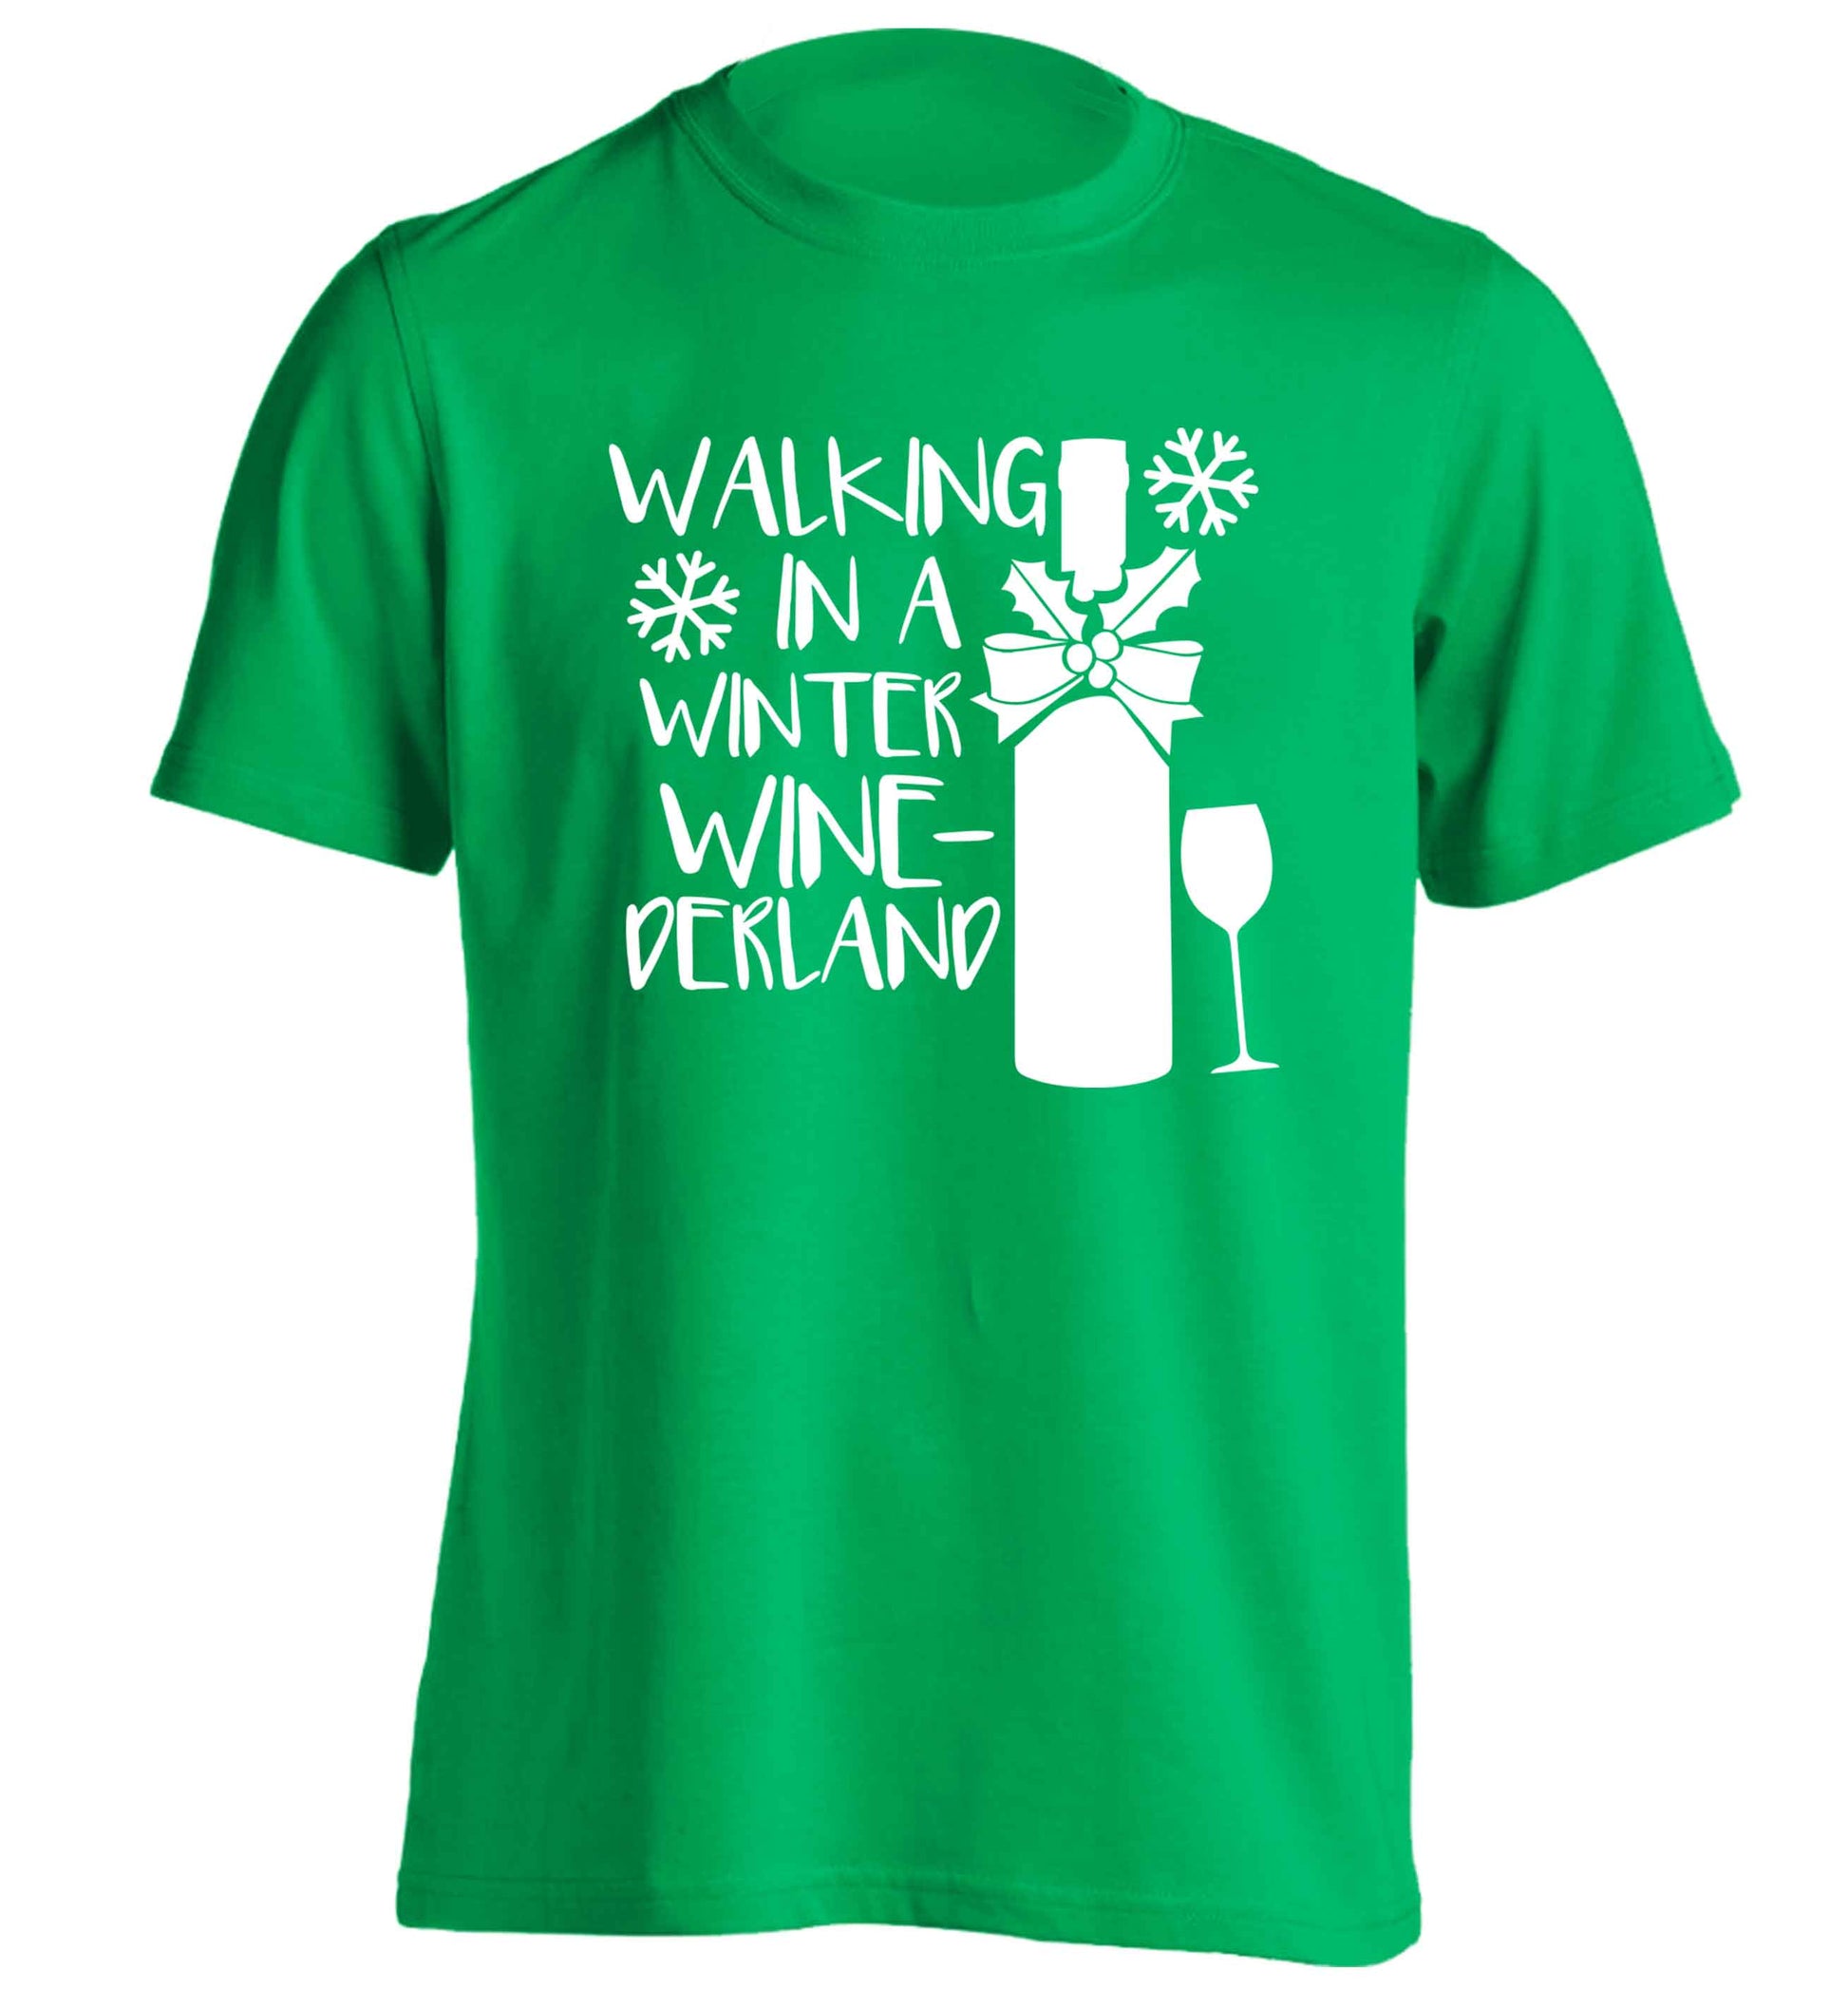 Walking in a wine-derwonderland adults unisex green Tshirt 2XL